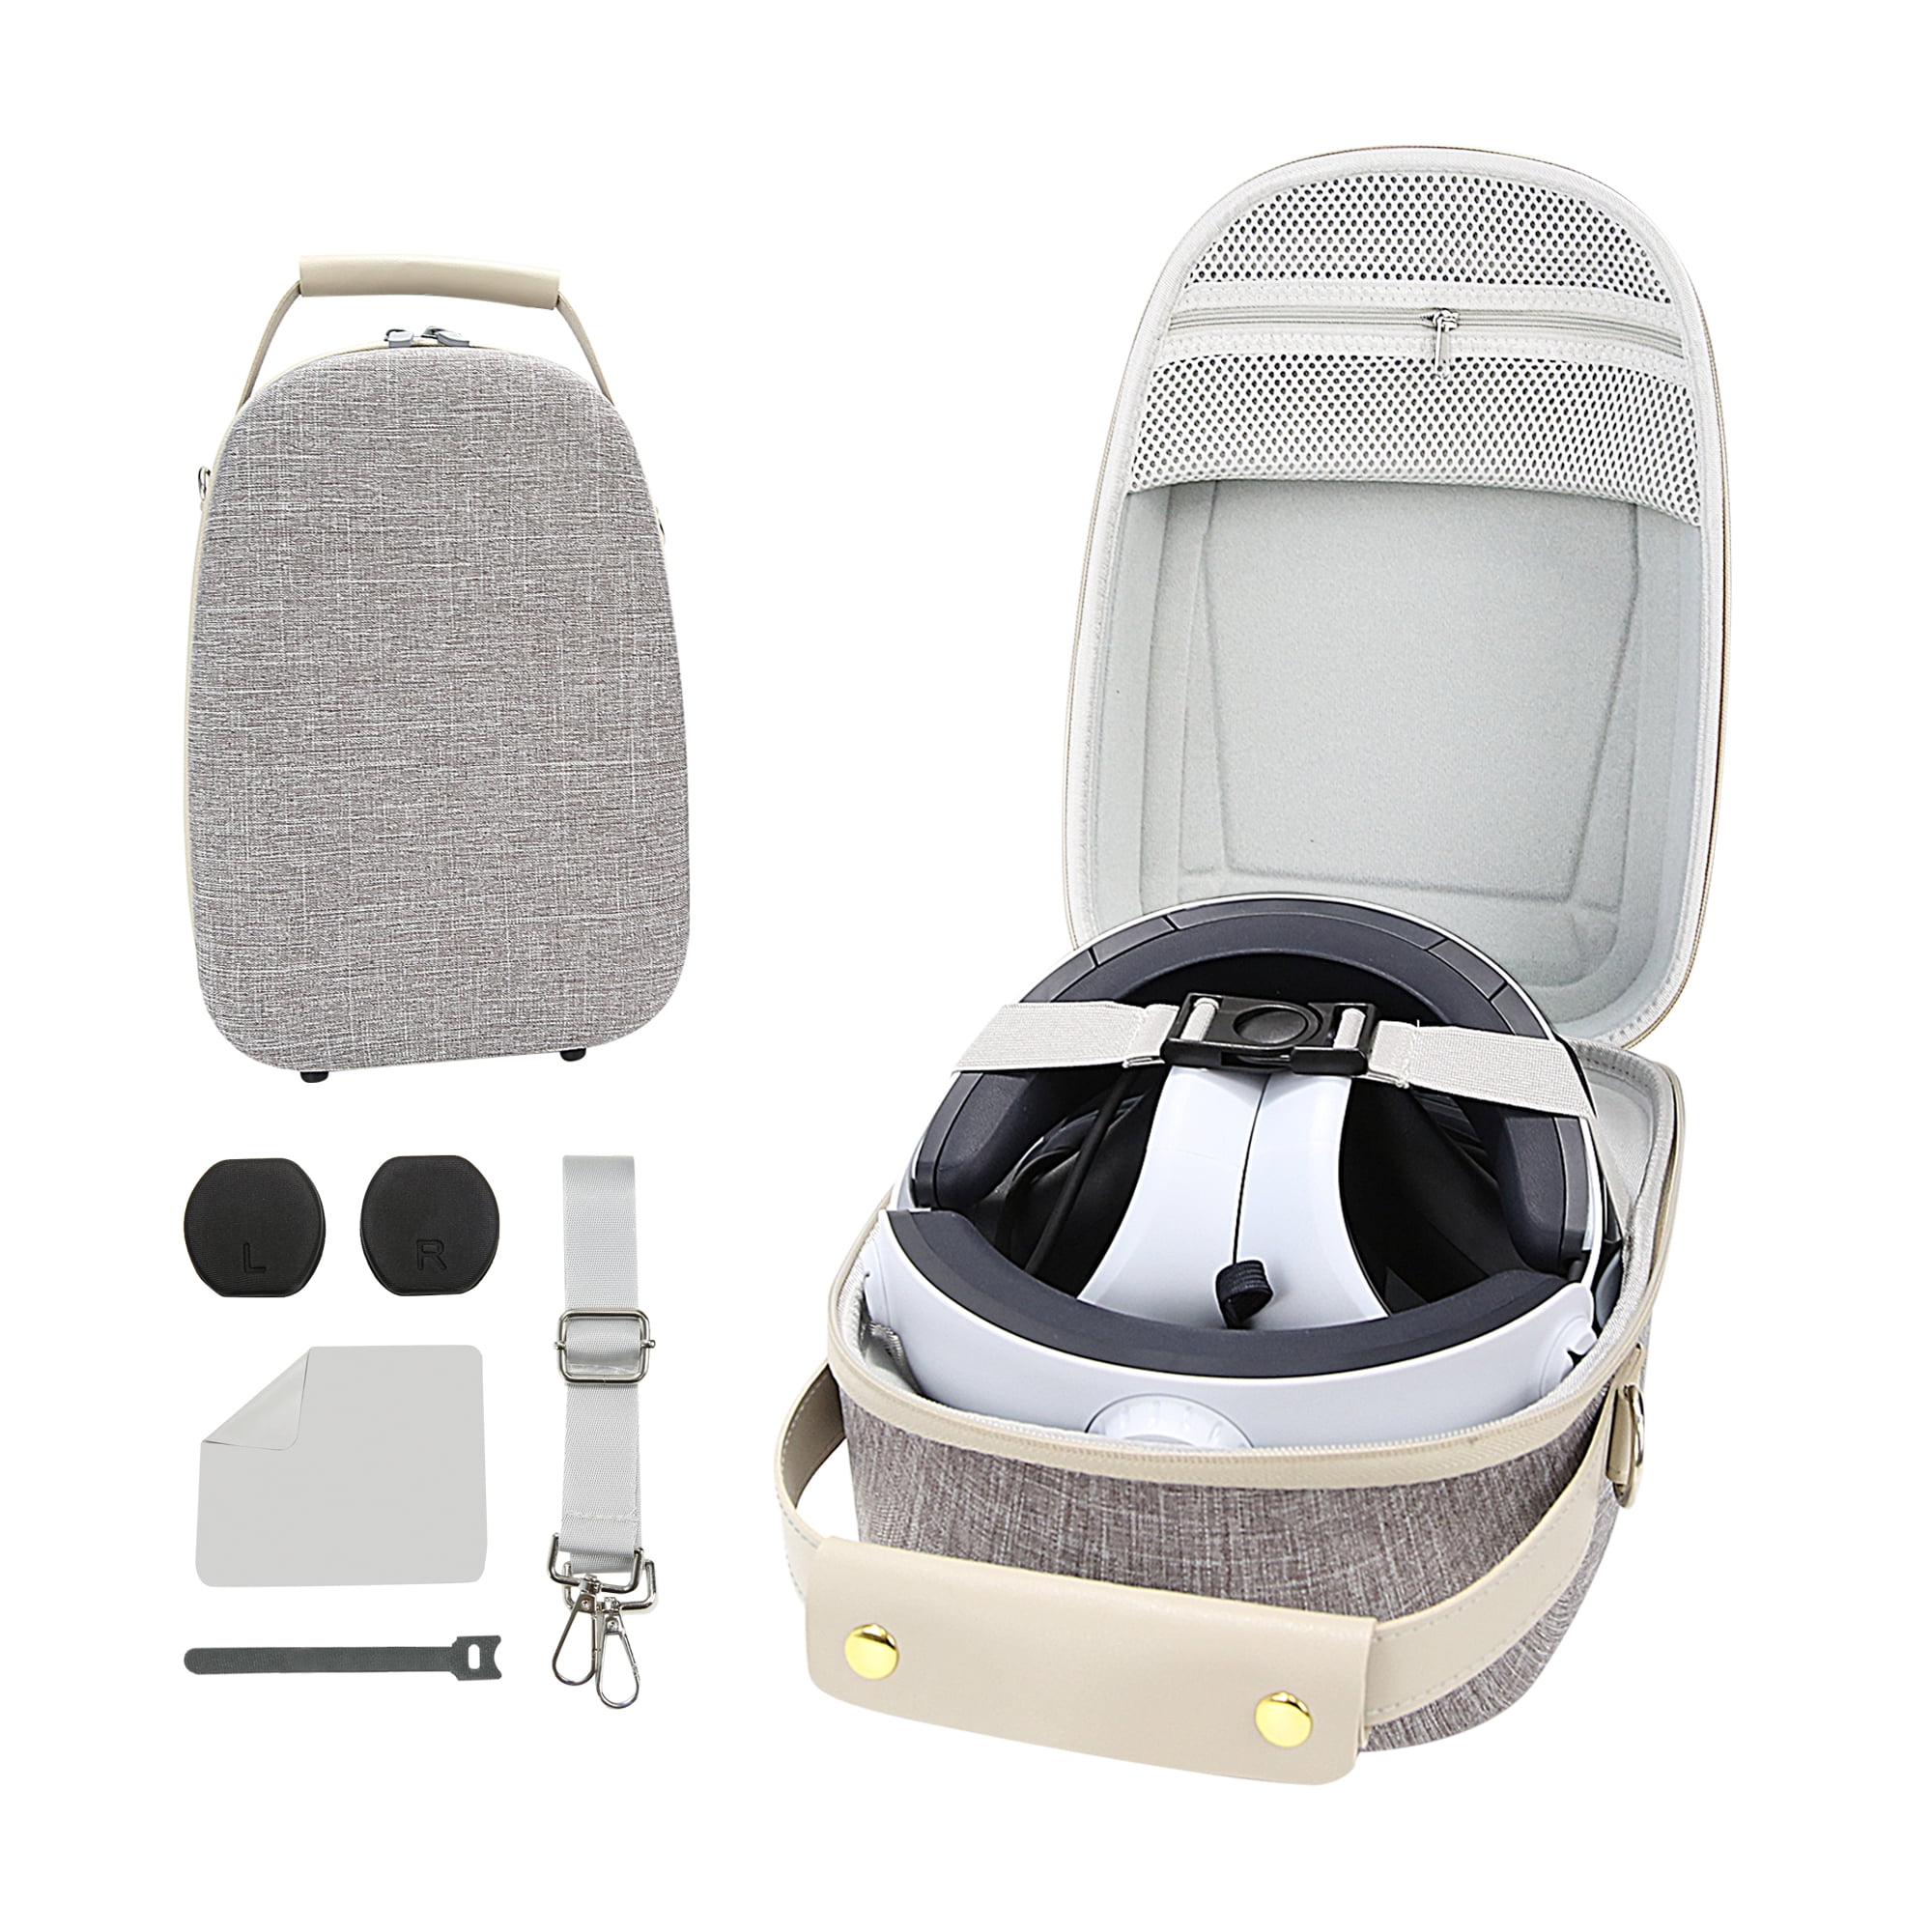 Mytrix VR2 Hard Shell Carrying Case Playstation VR2 Travel Storage Bag with  Shoulder Strap, Fits PSVR2 Headset &Sense Controller Accessories, Gift for  Lens Protector|Lens Cloth|Cable Management Strap